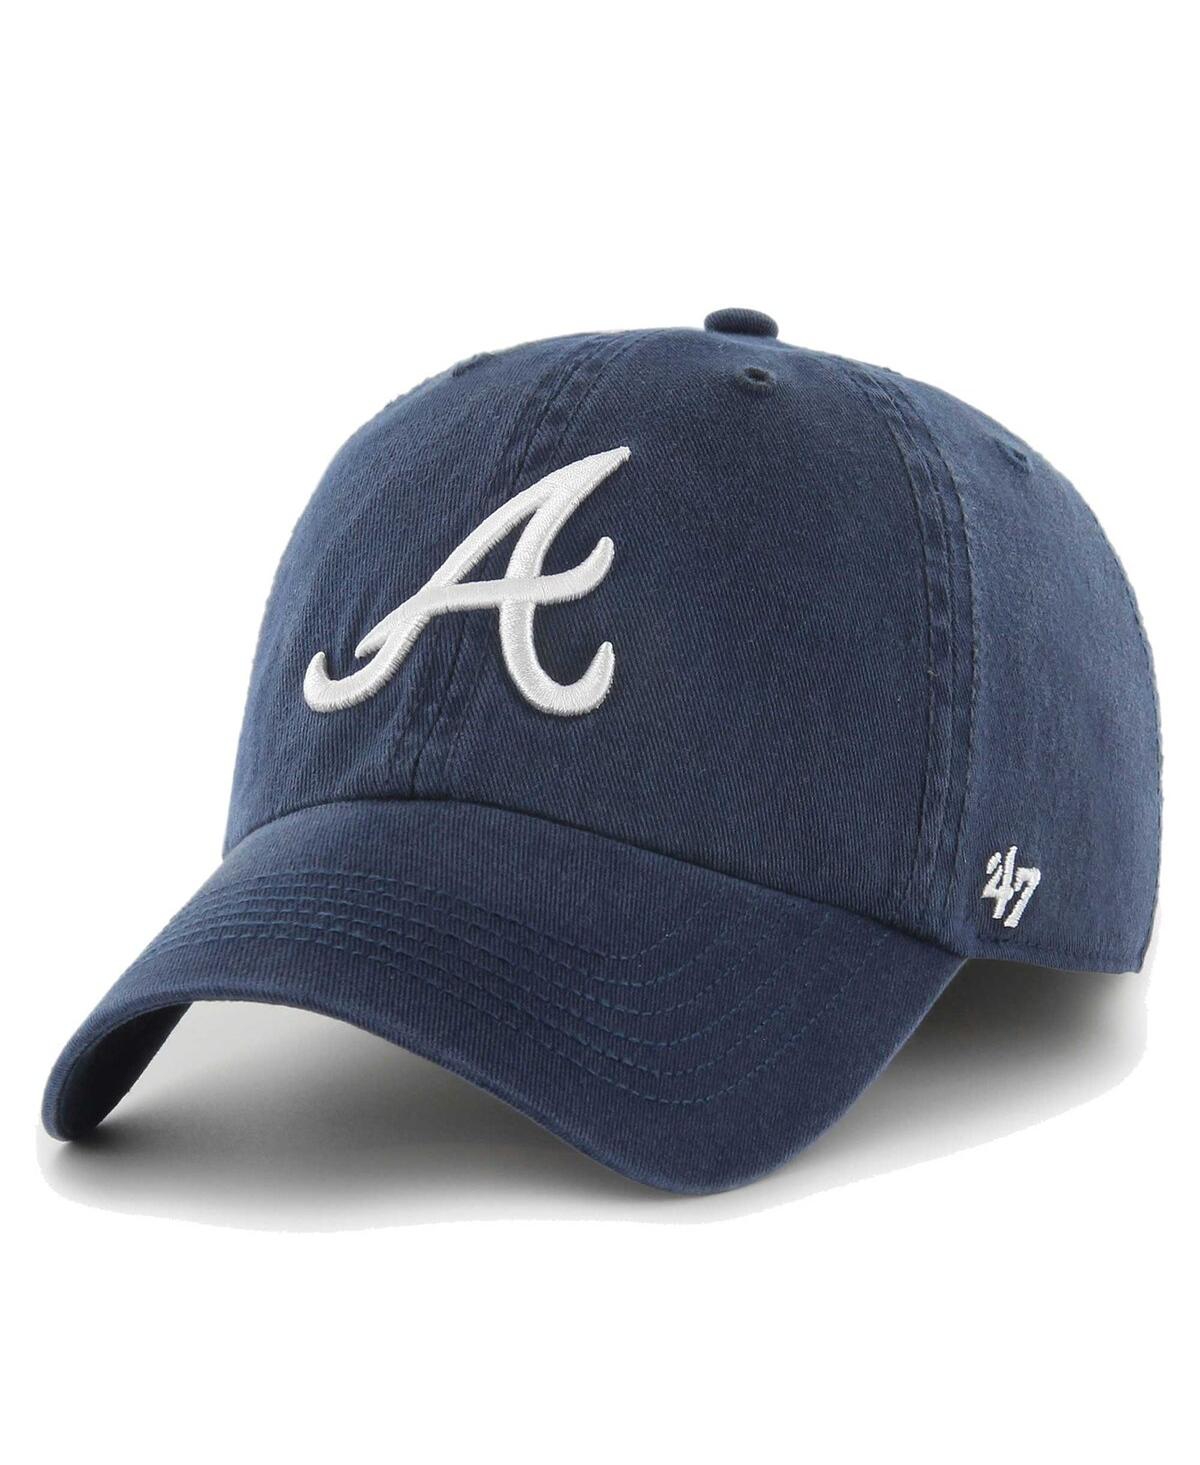 Men's '47 Brand Navy Atlanta Braves Franchise Logo Fitted Hat - Navy